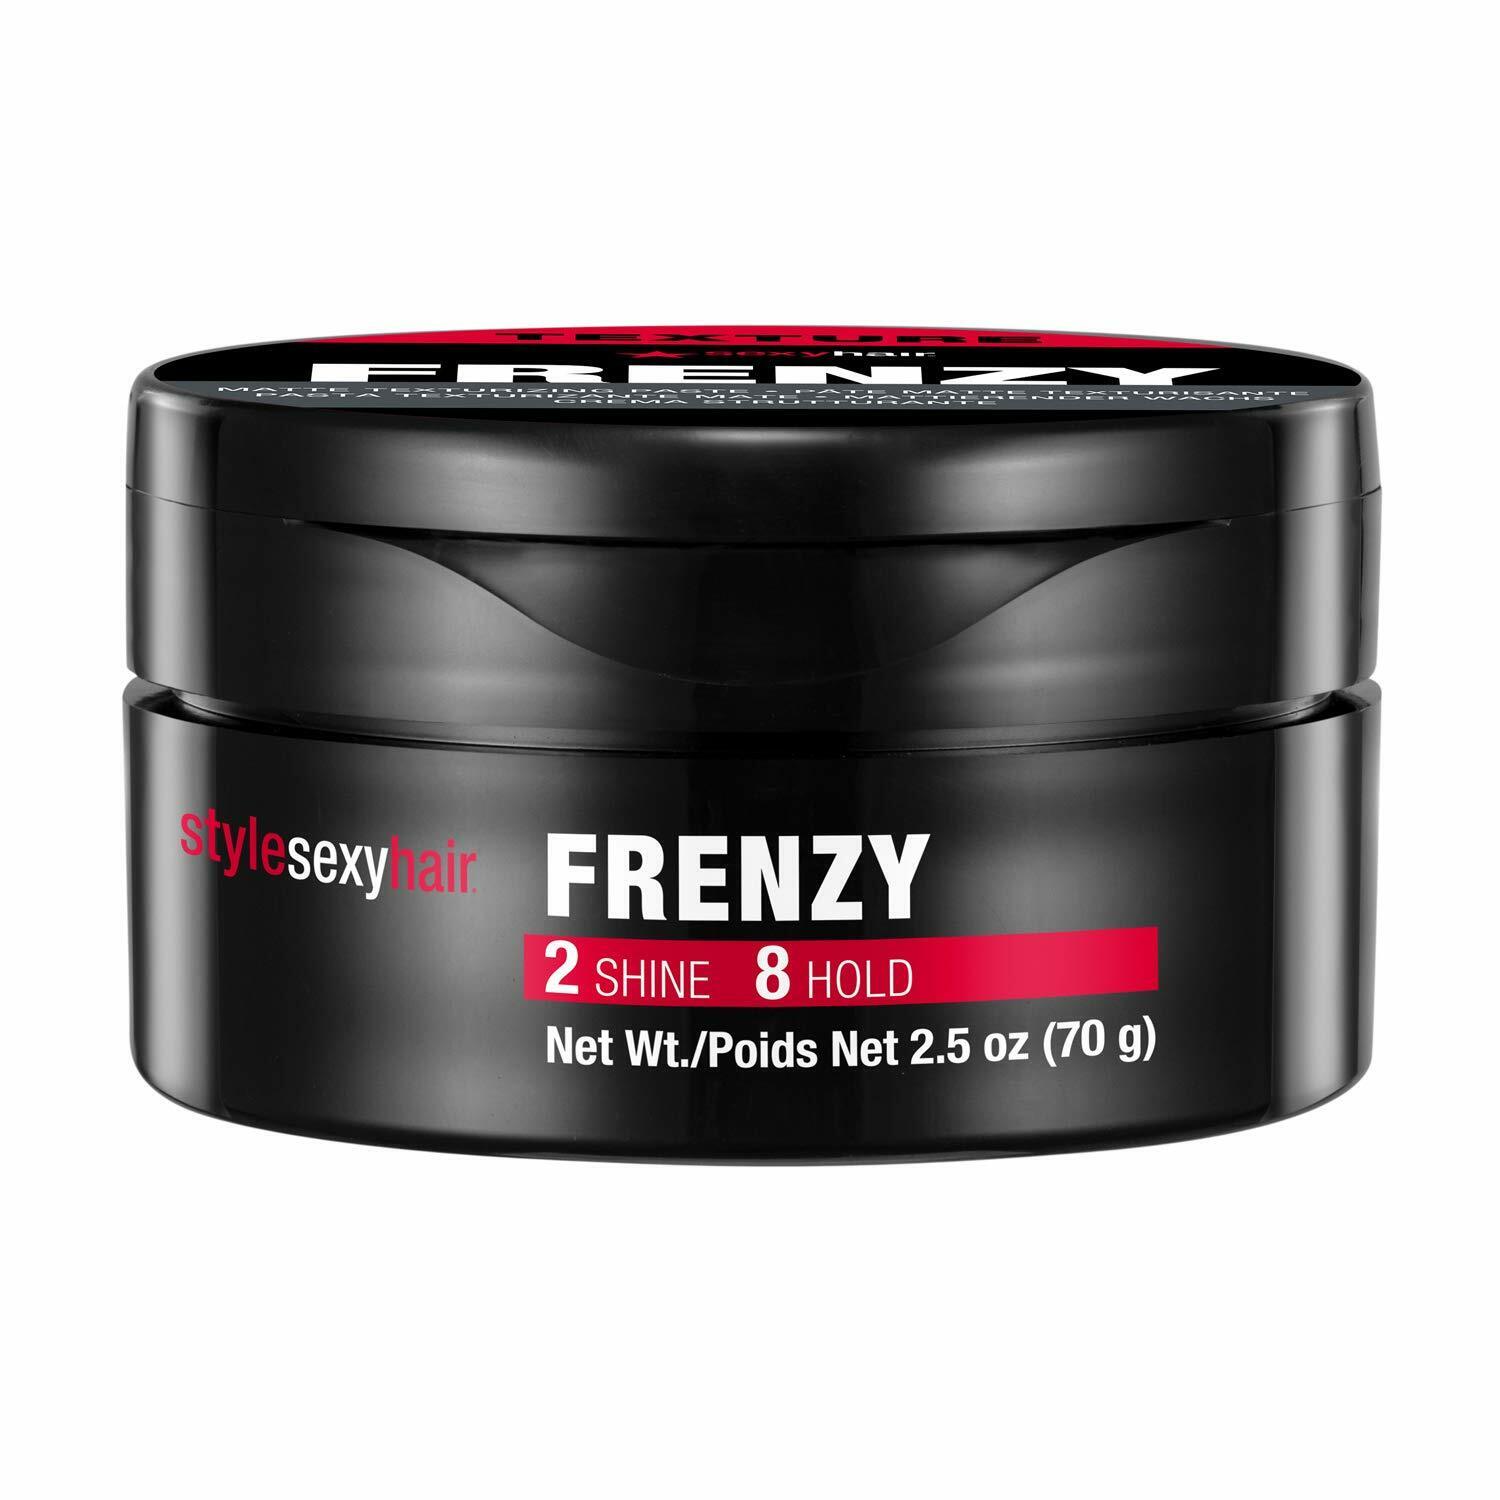 Style Sexy Hair Frenzy Matte Texturizing Paste 2.5 oz (2 Shine + 8 Hold) - image 1 of 3